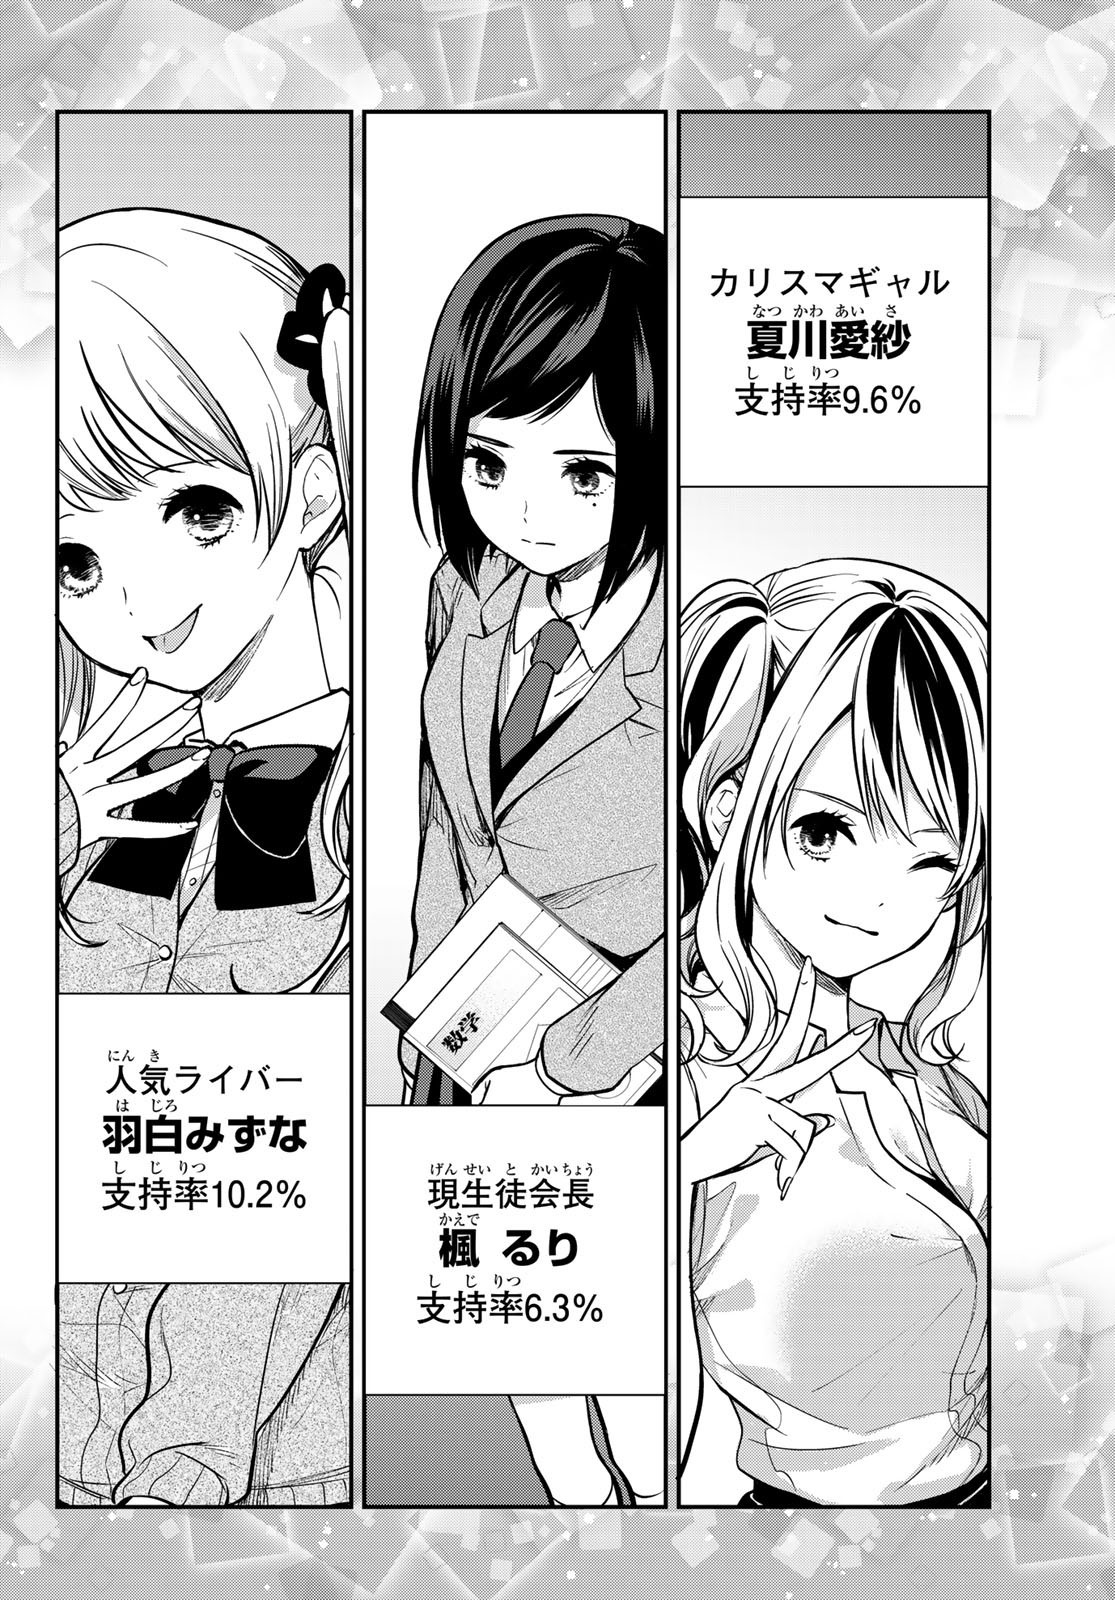 Kimi ga Megami Nara Ii no ni (I Wish You Were My Muse) - Chapter 002 - Page 2